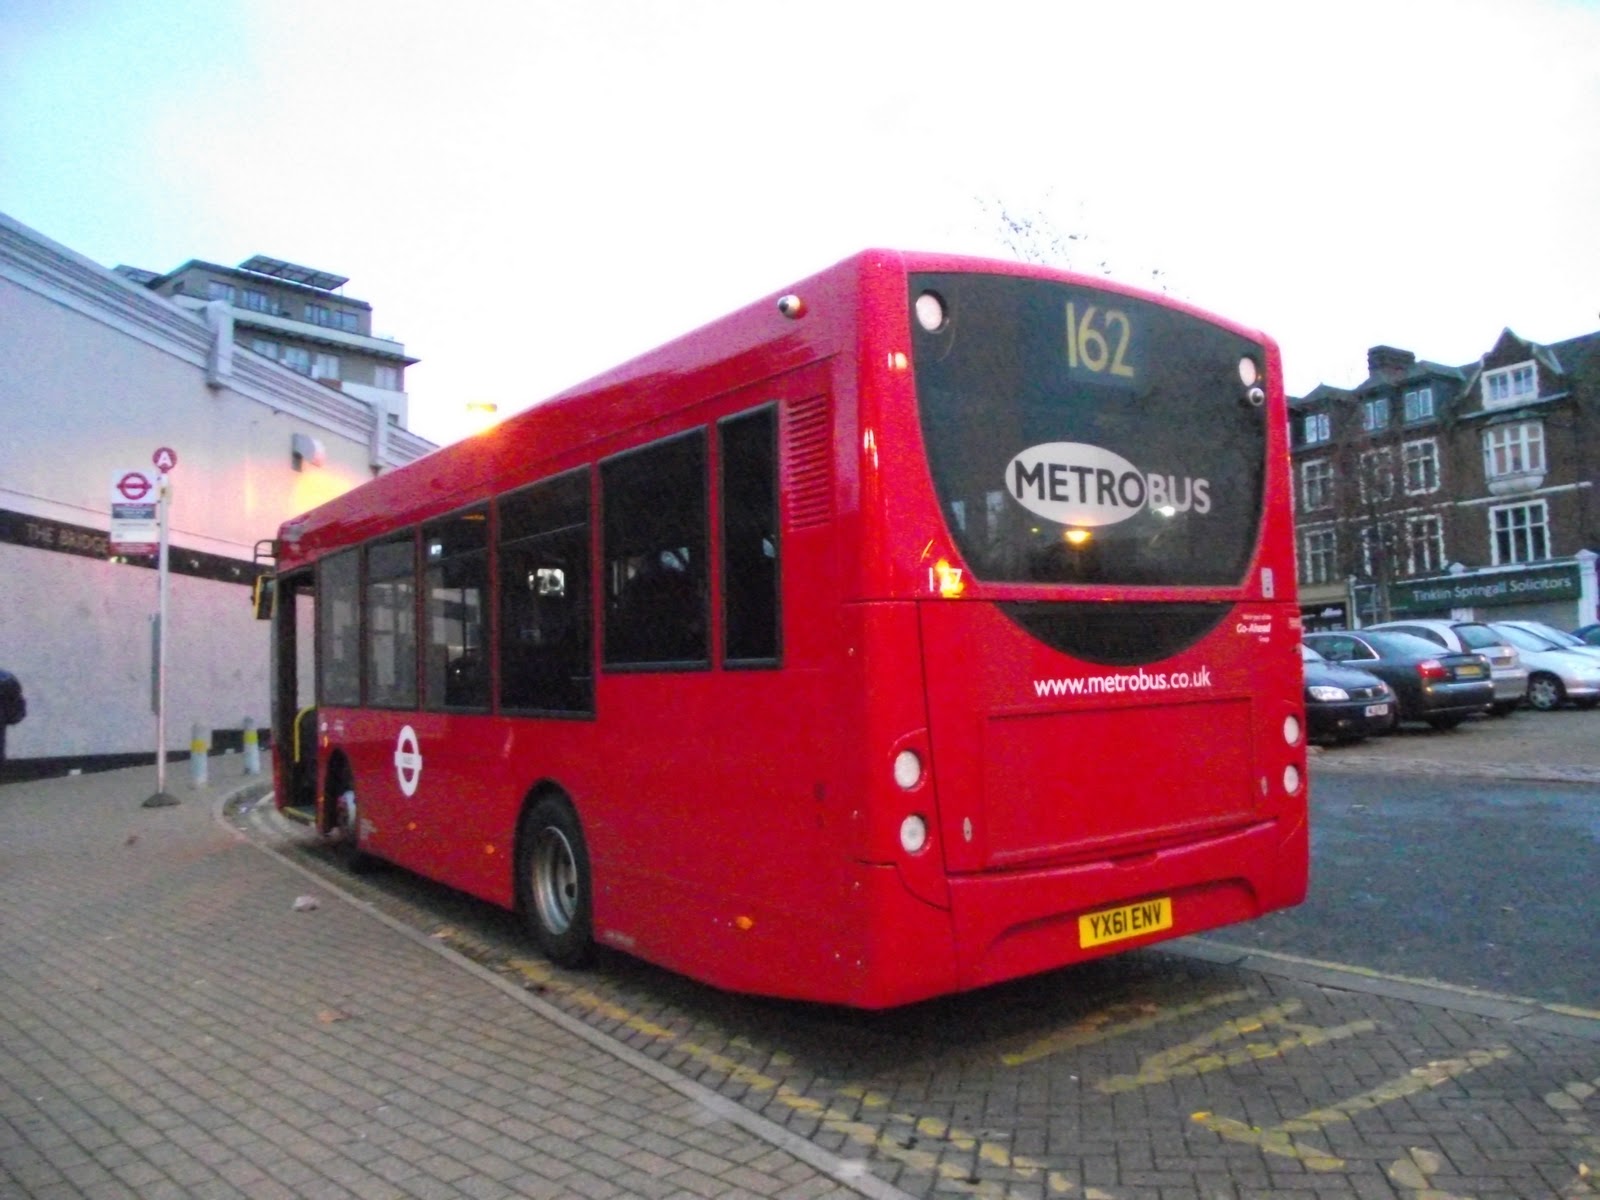 tom london & surrey bus blog: strange turns on route 162